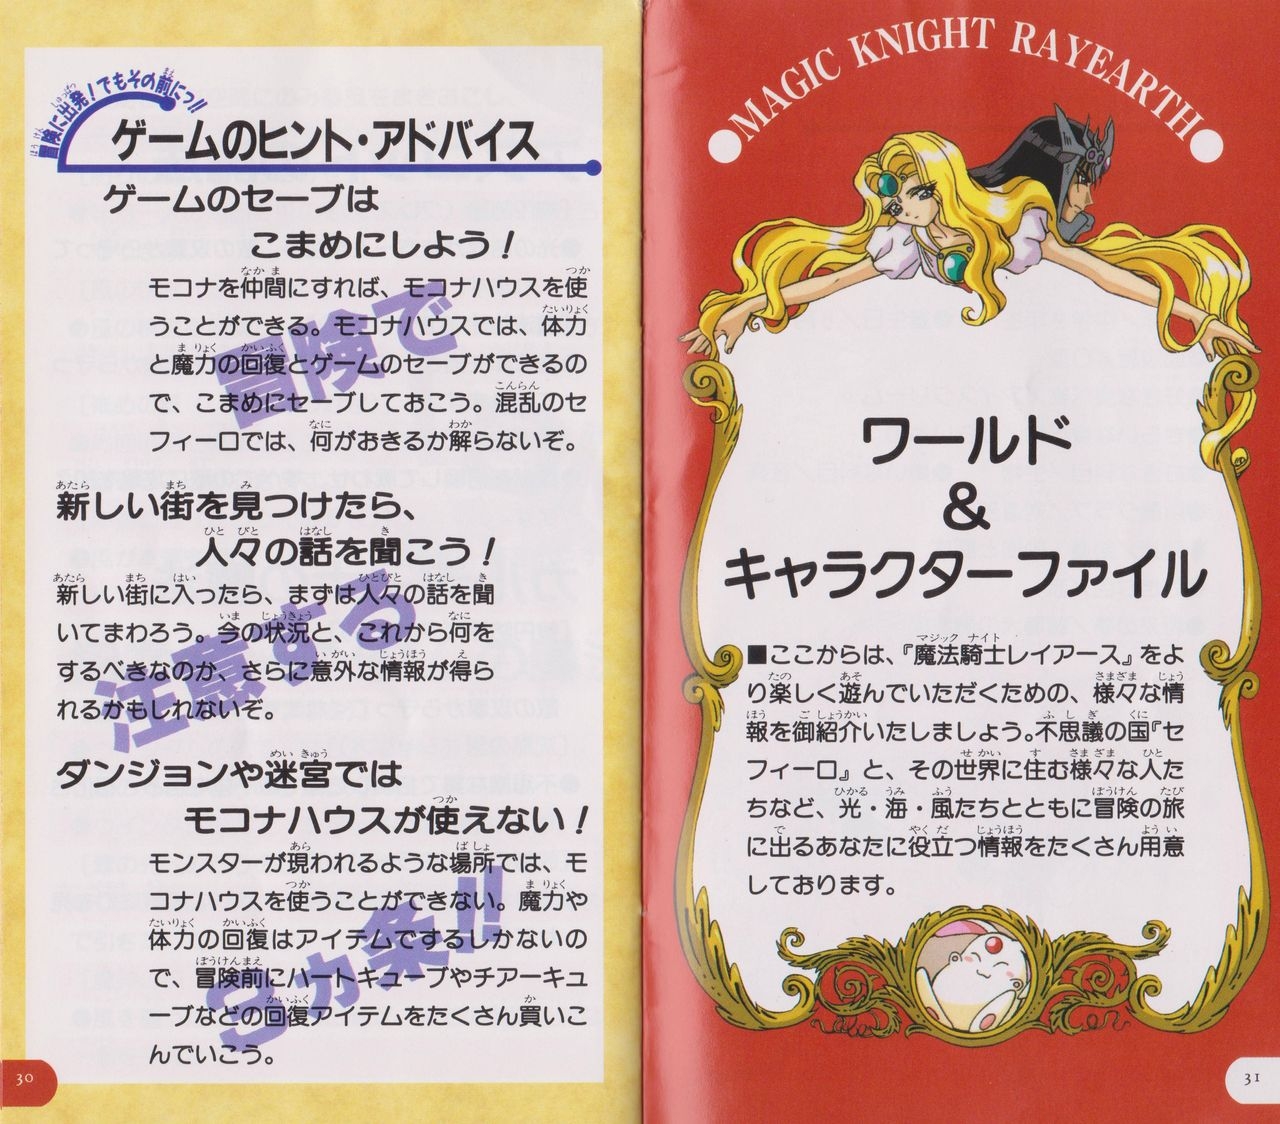 Magic Knight Rayearth - Box & Manual Scans [Super Famicom] 18